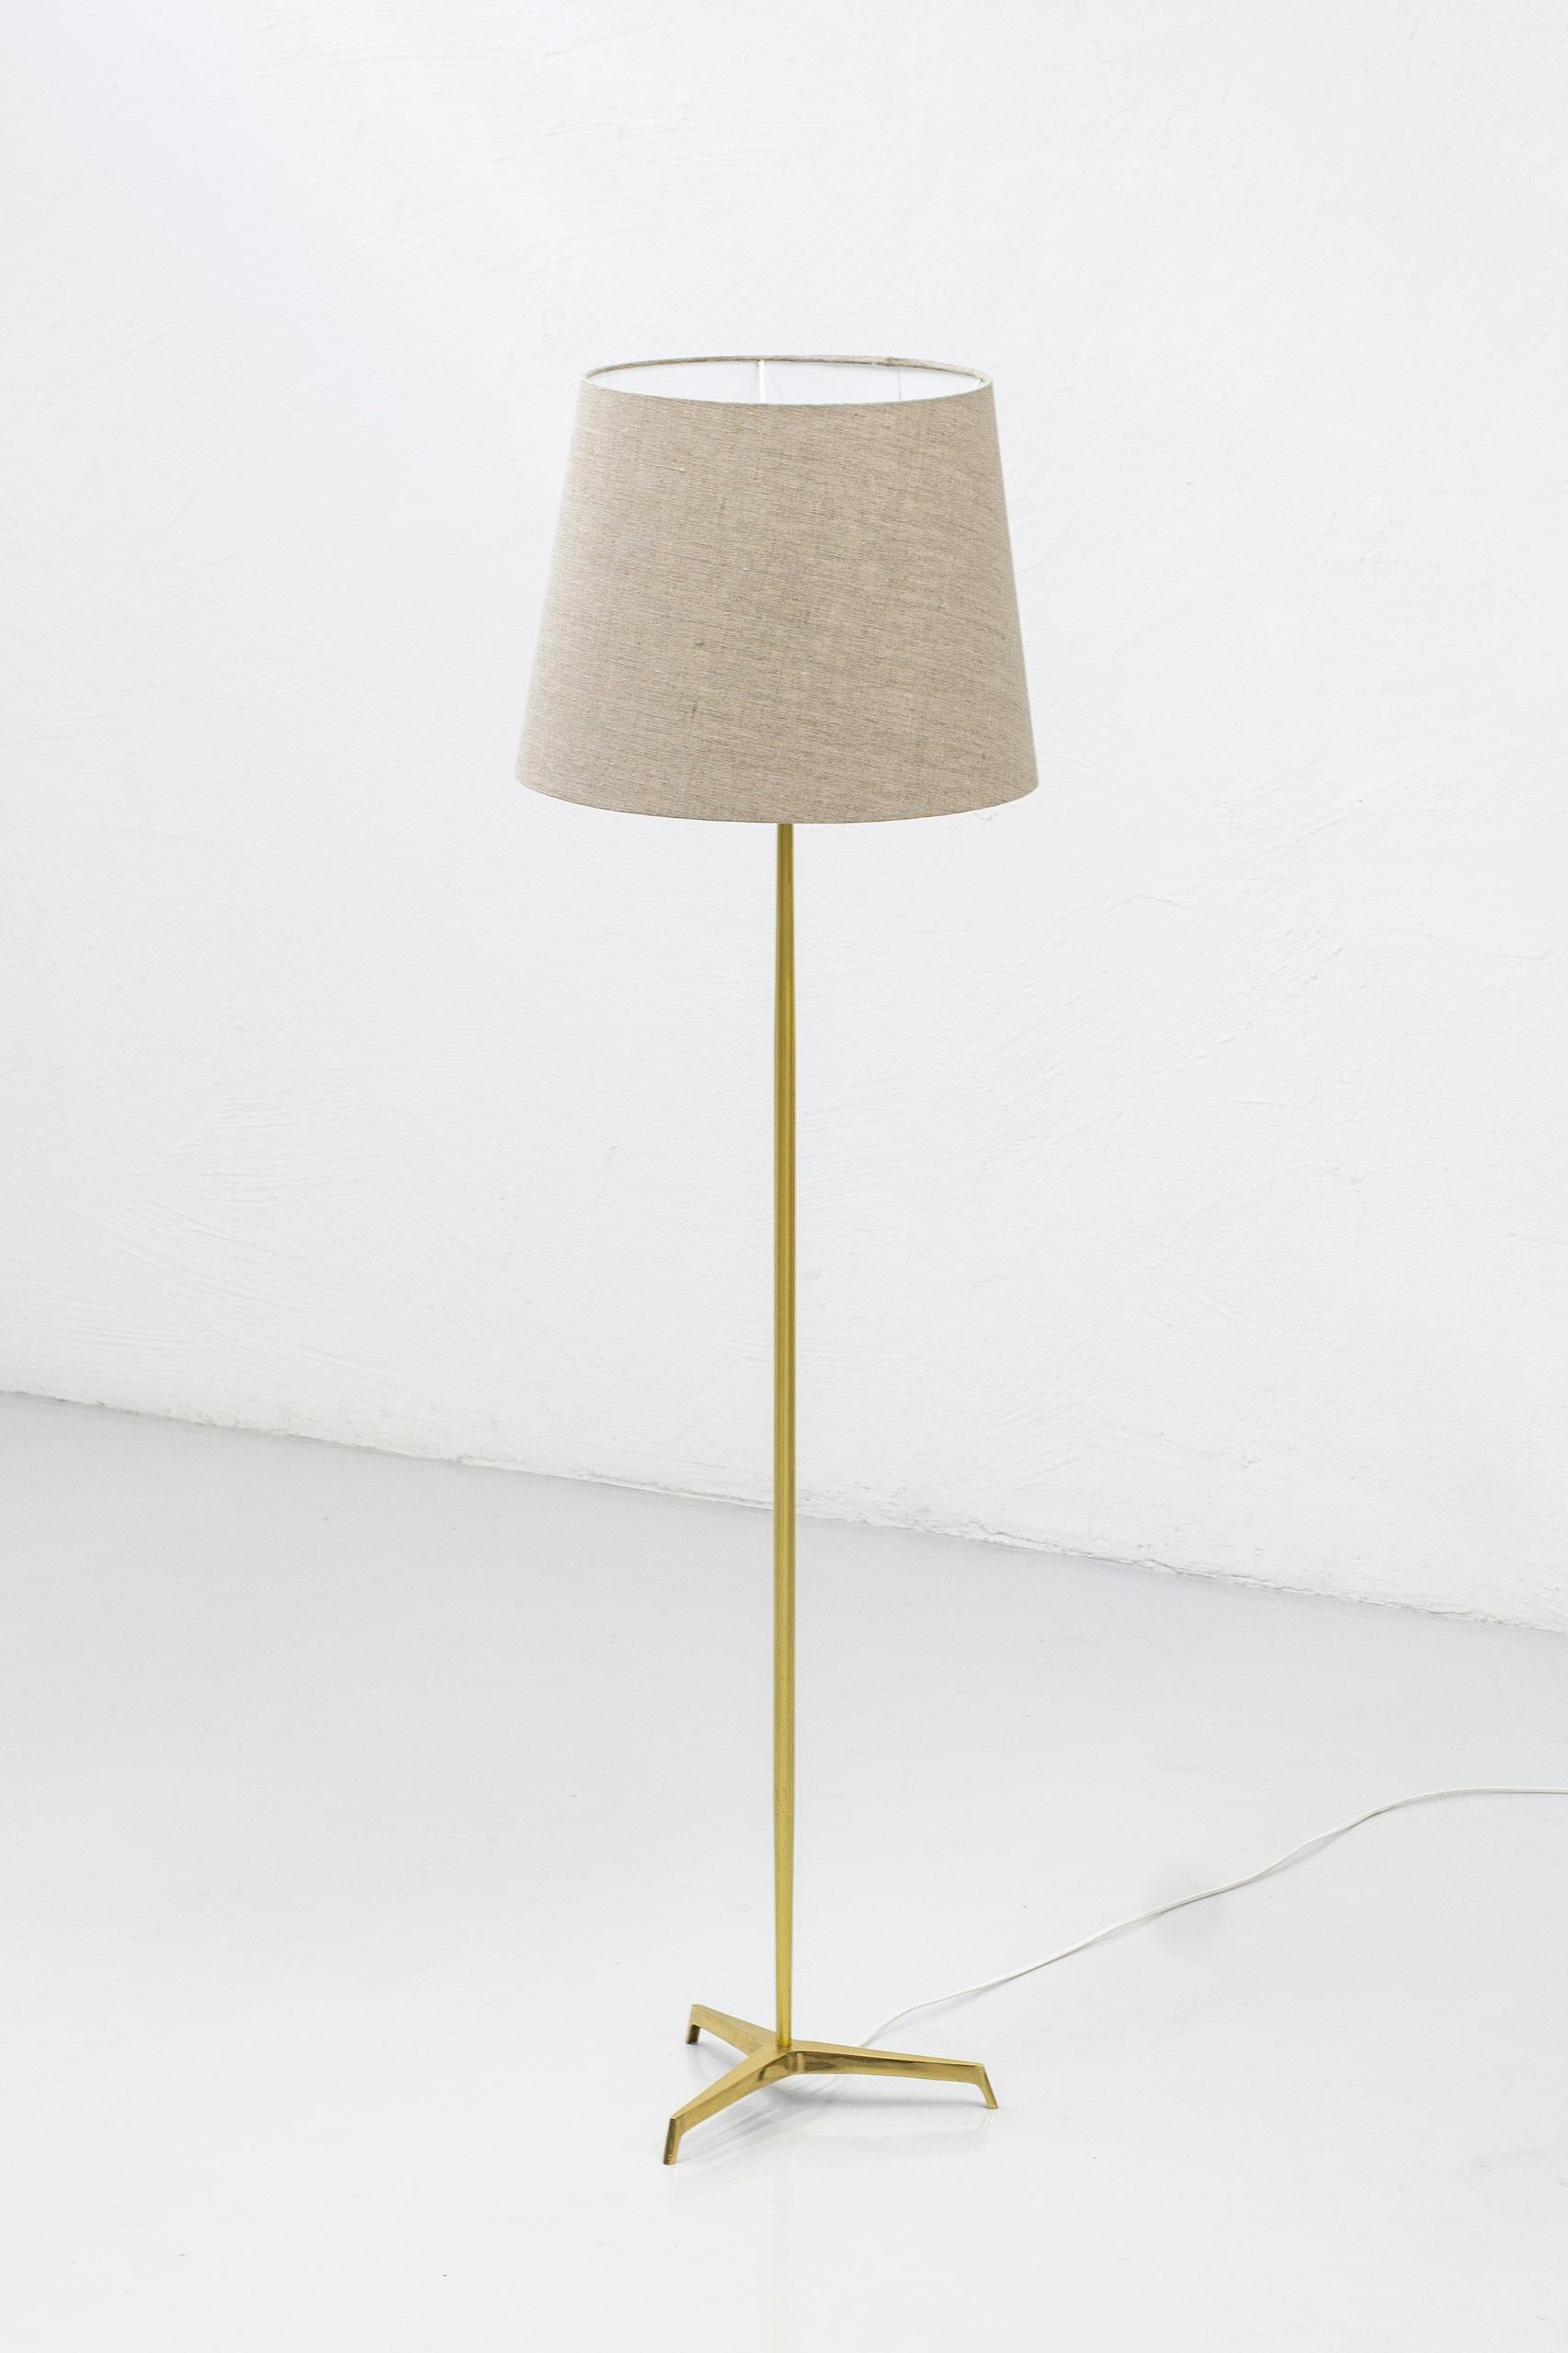 Scandinavian Modern Swedish Tripod Floor Lamp in Polished Brass and Linen, Sweden, 1950s For Sale